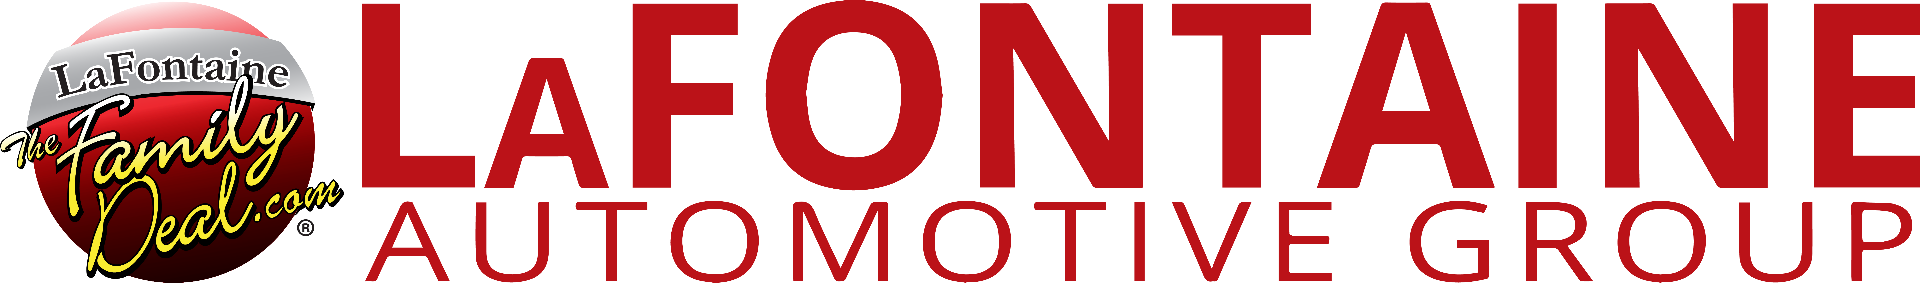 LaFontaine Automotive Group Logo